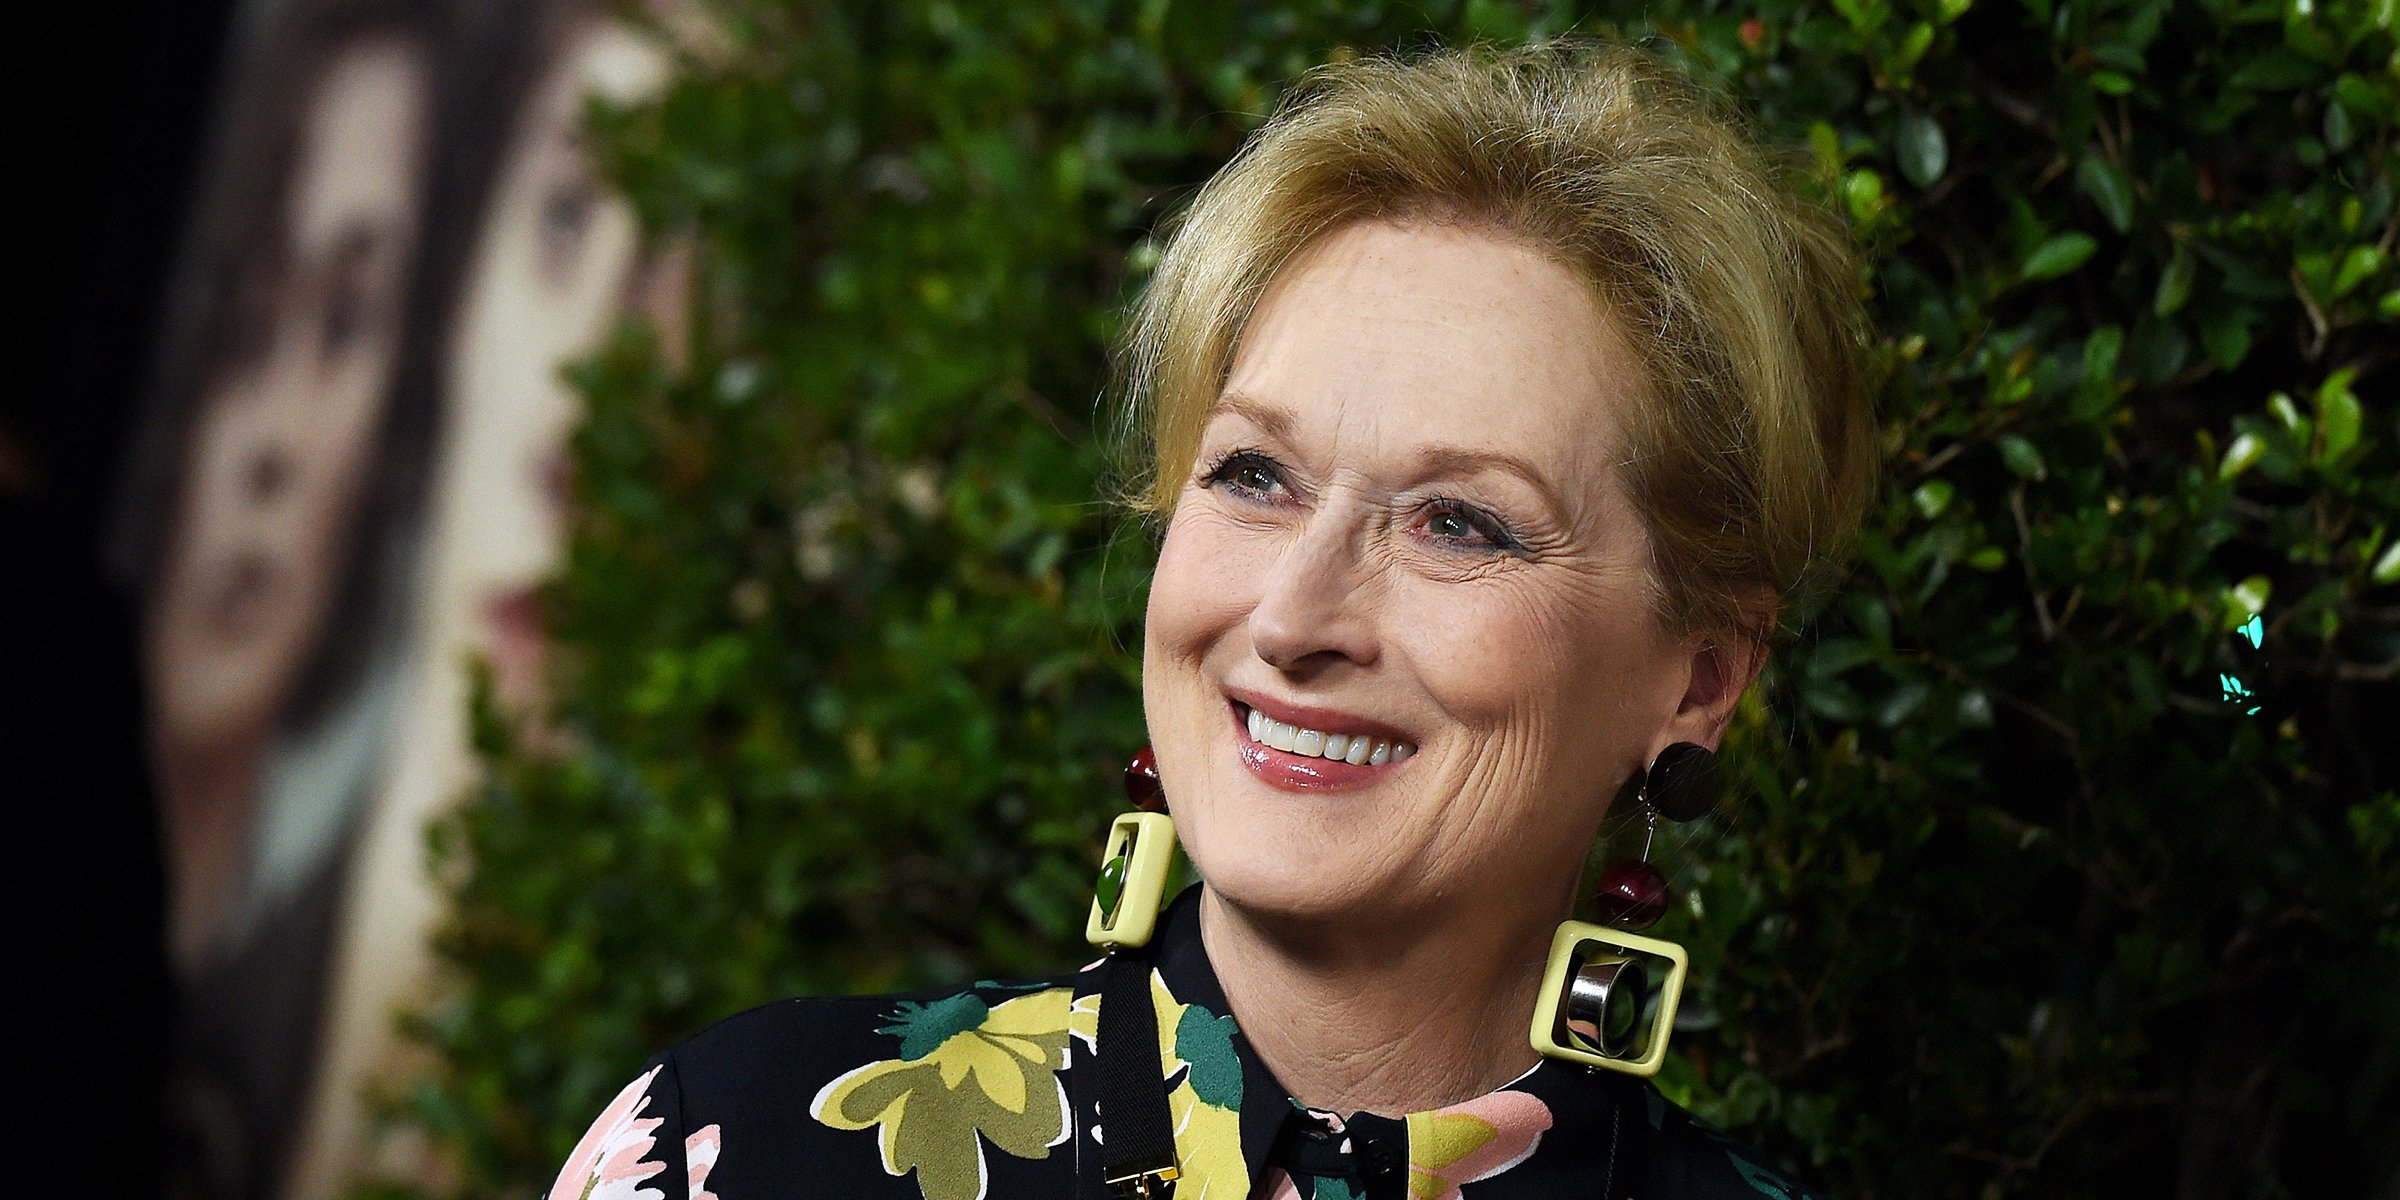 Meryl Streep | Source: Getty Images